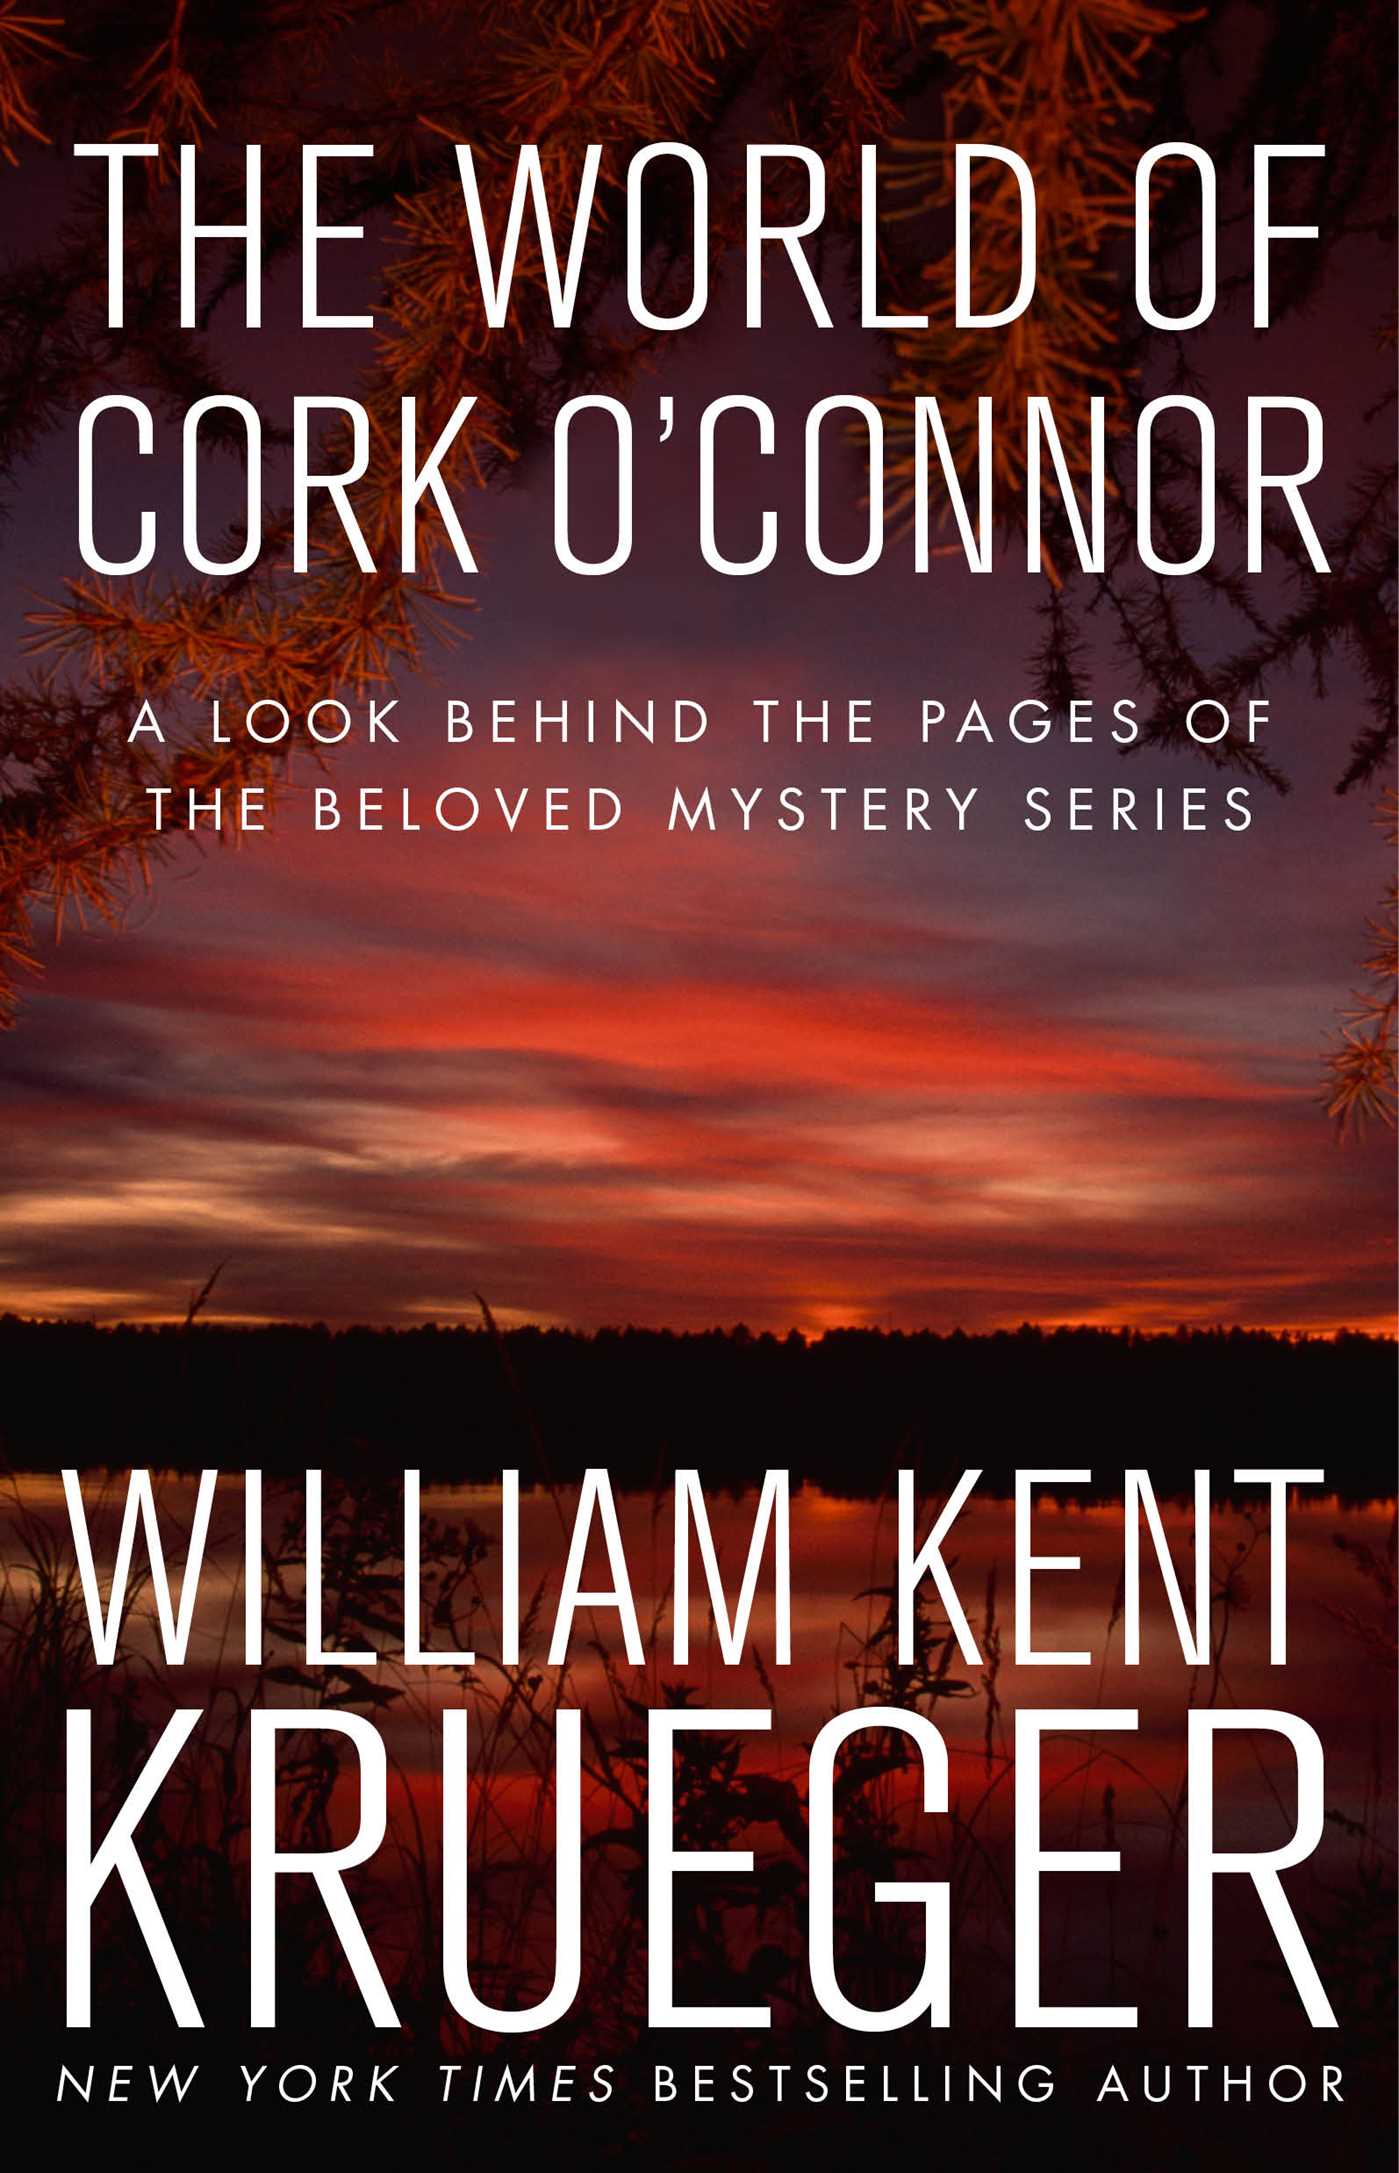 World of Cork O'Connor